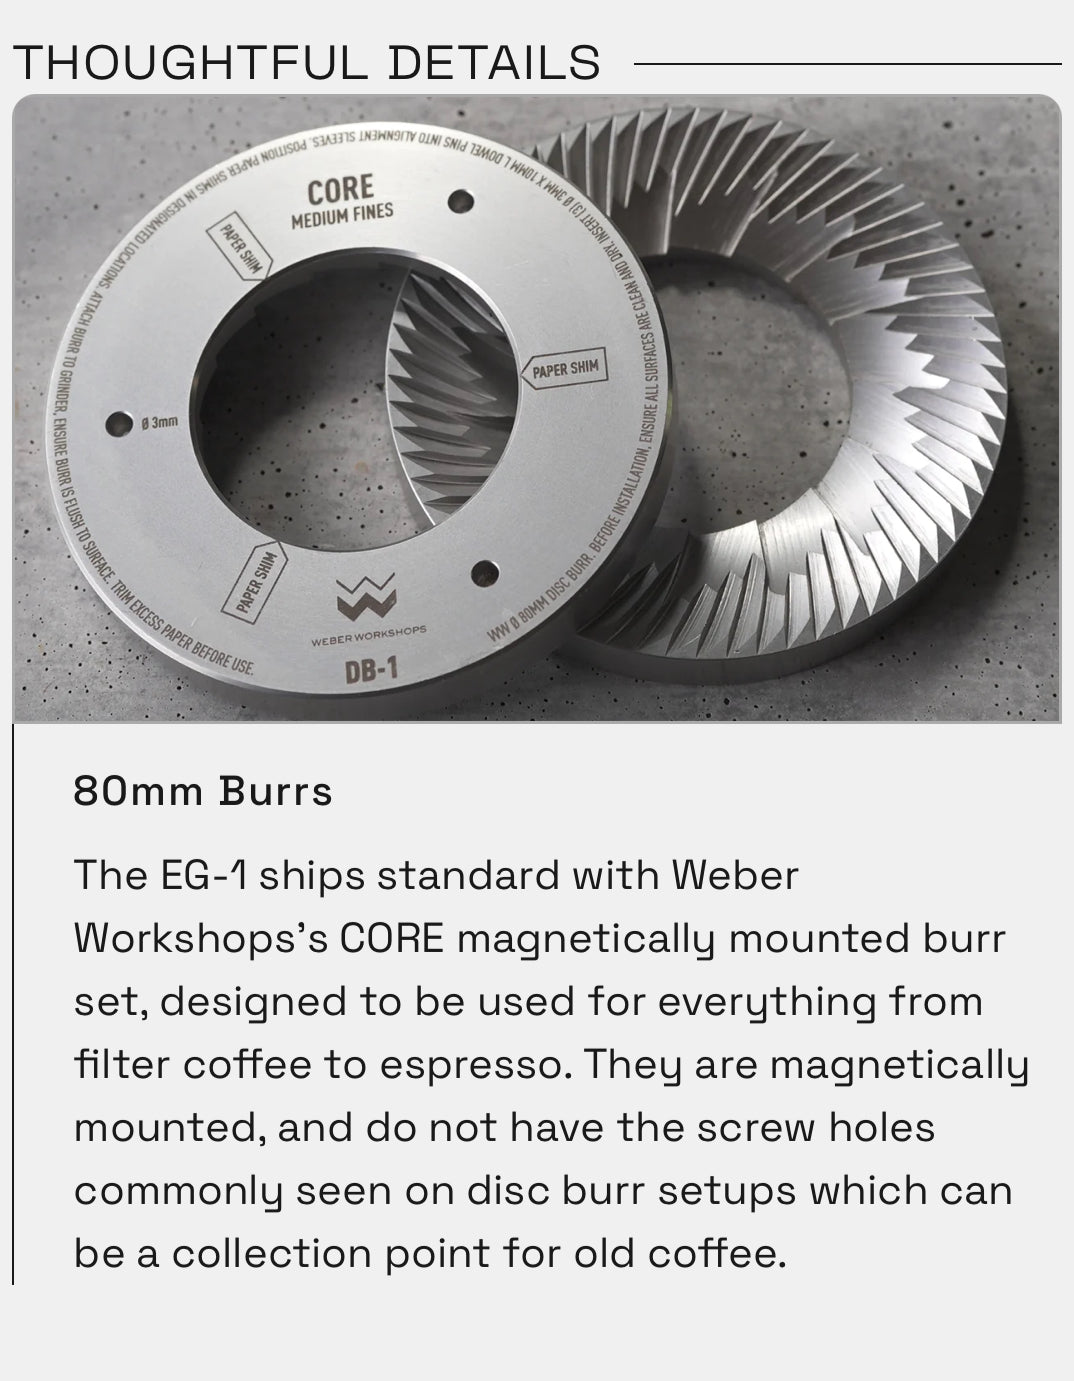 Weber Workshops The EG-1
80mm Flat Burr Kaffeemühle Silber - inklusive Versand und Steuern - Coffee Coaching Club